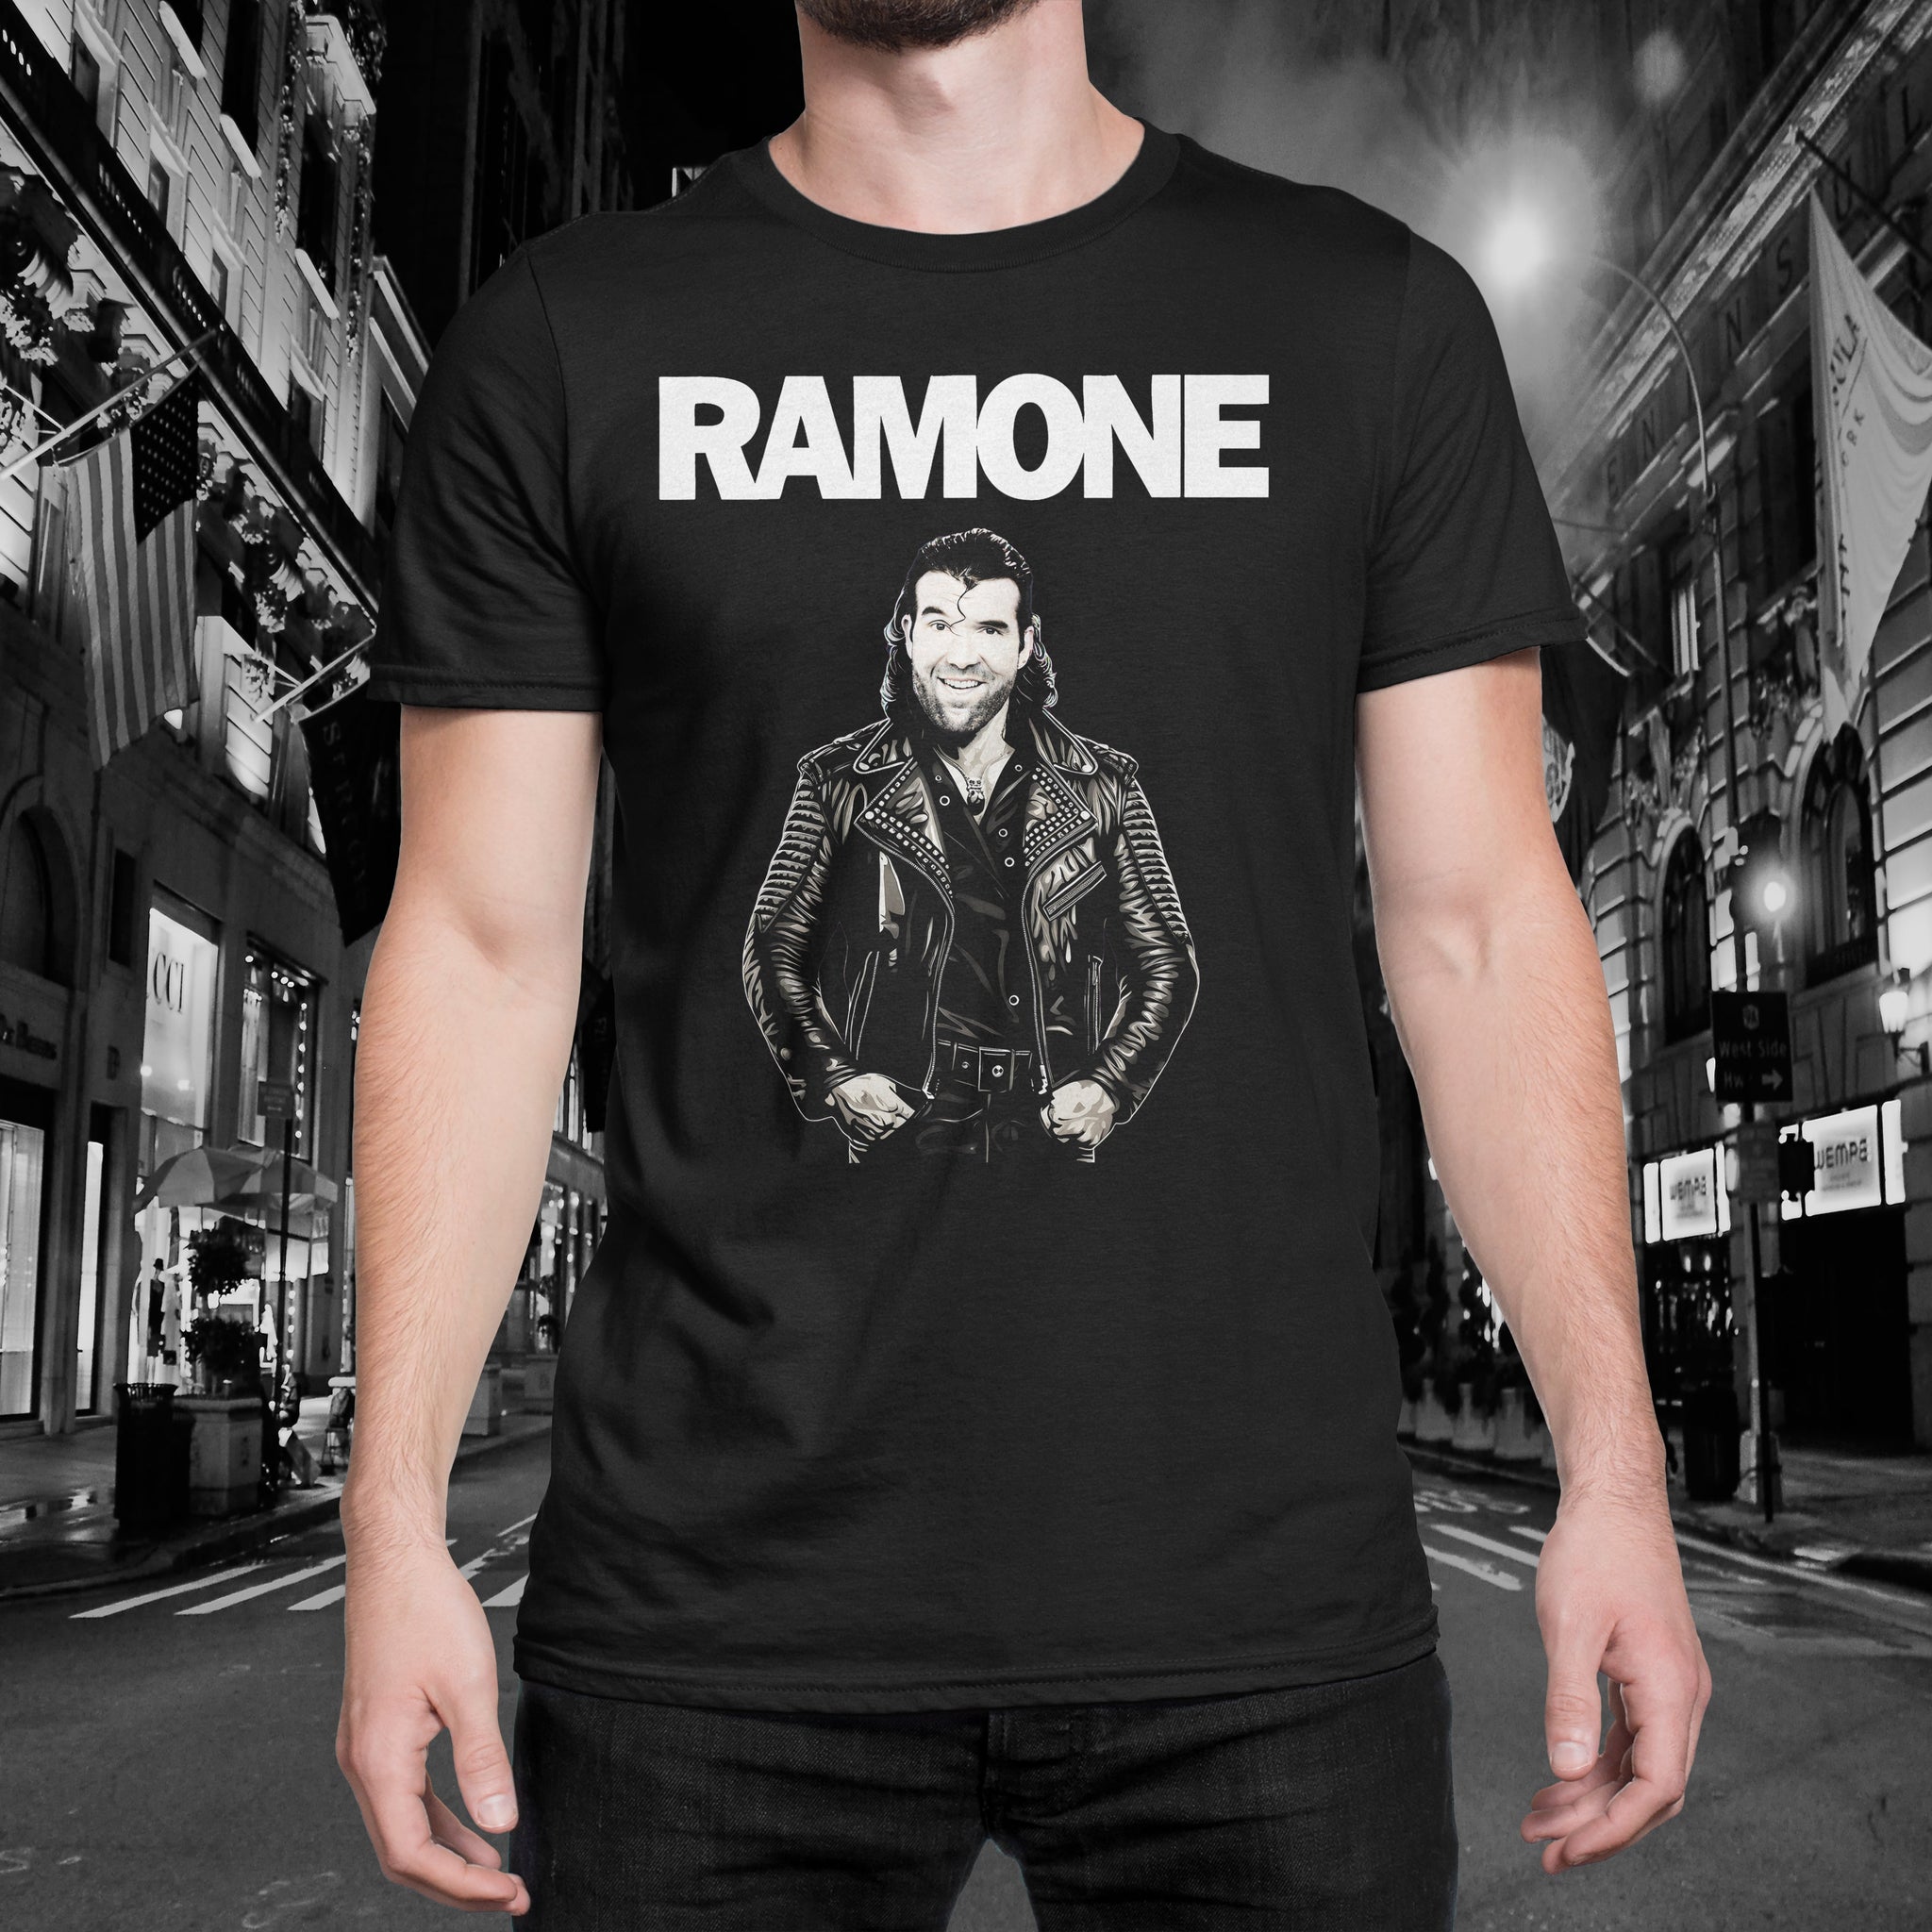 Razor "Ramones" Tee